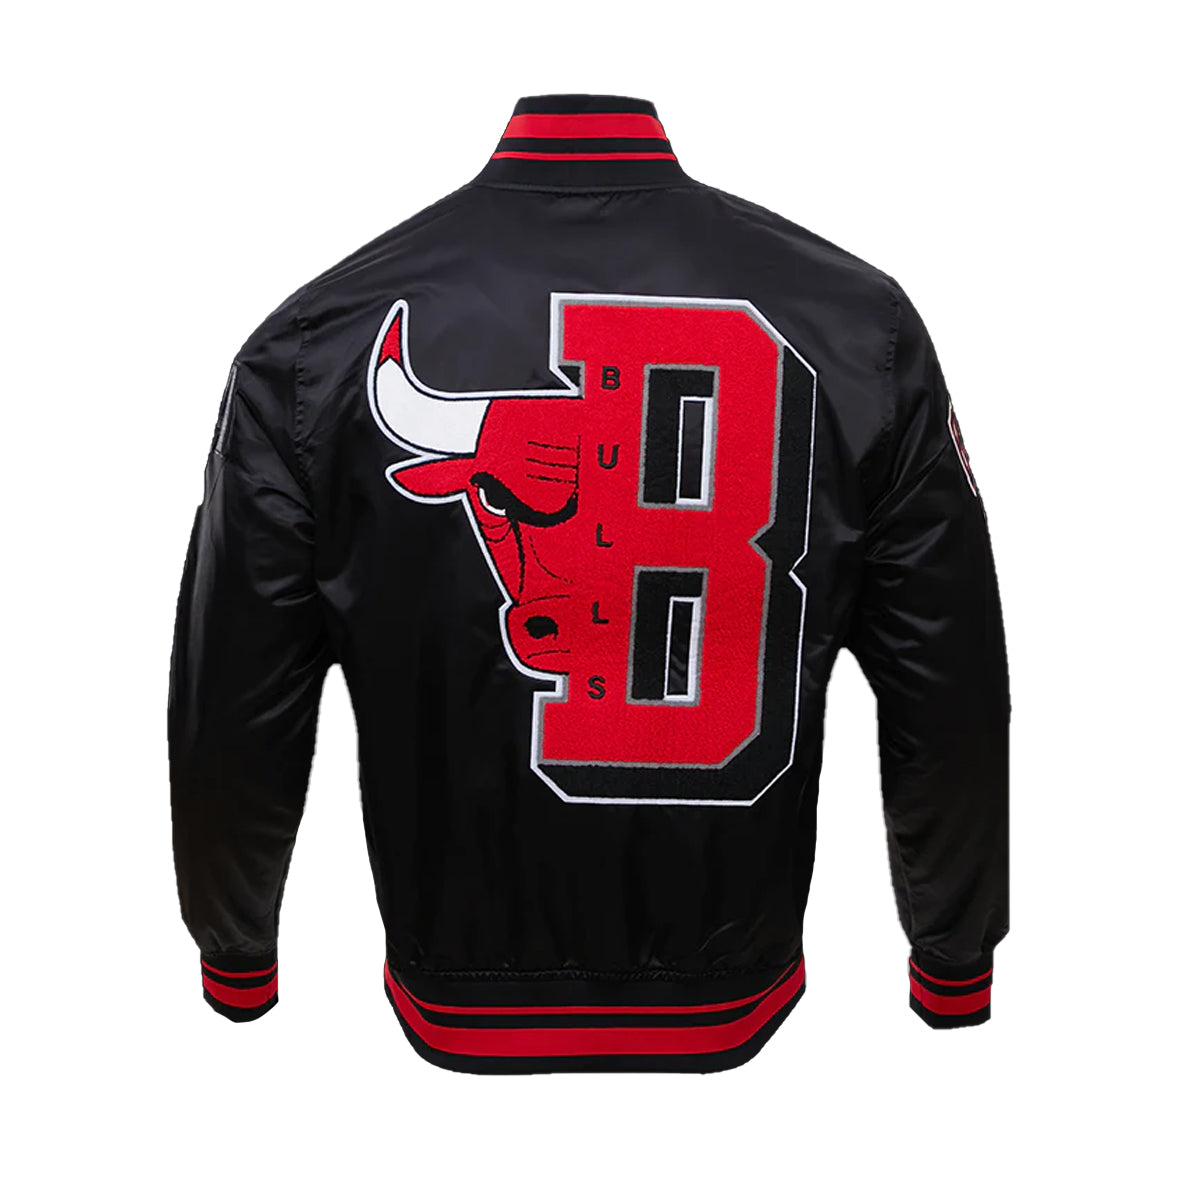 chicago bulls jacket 3xl